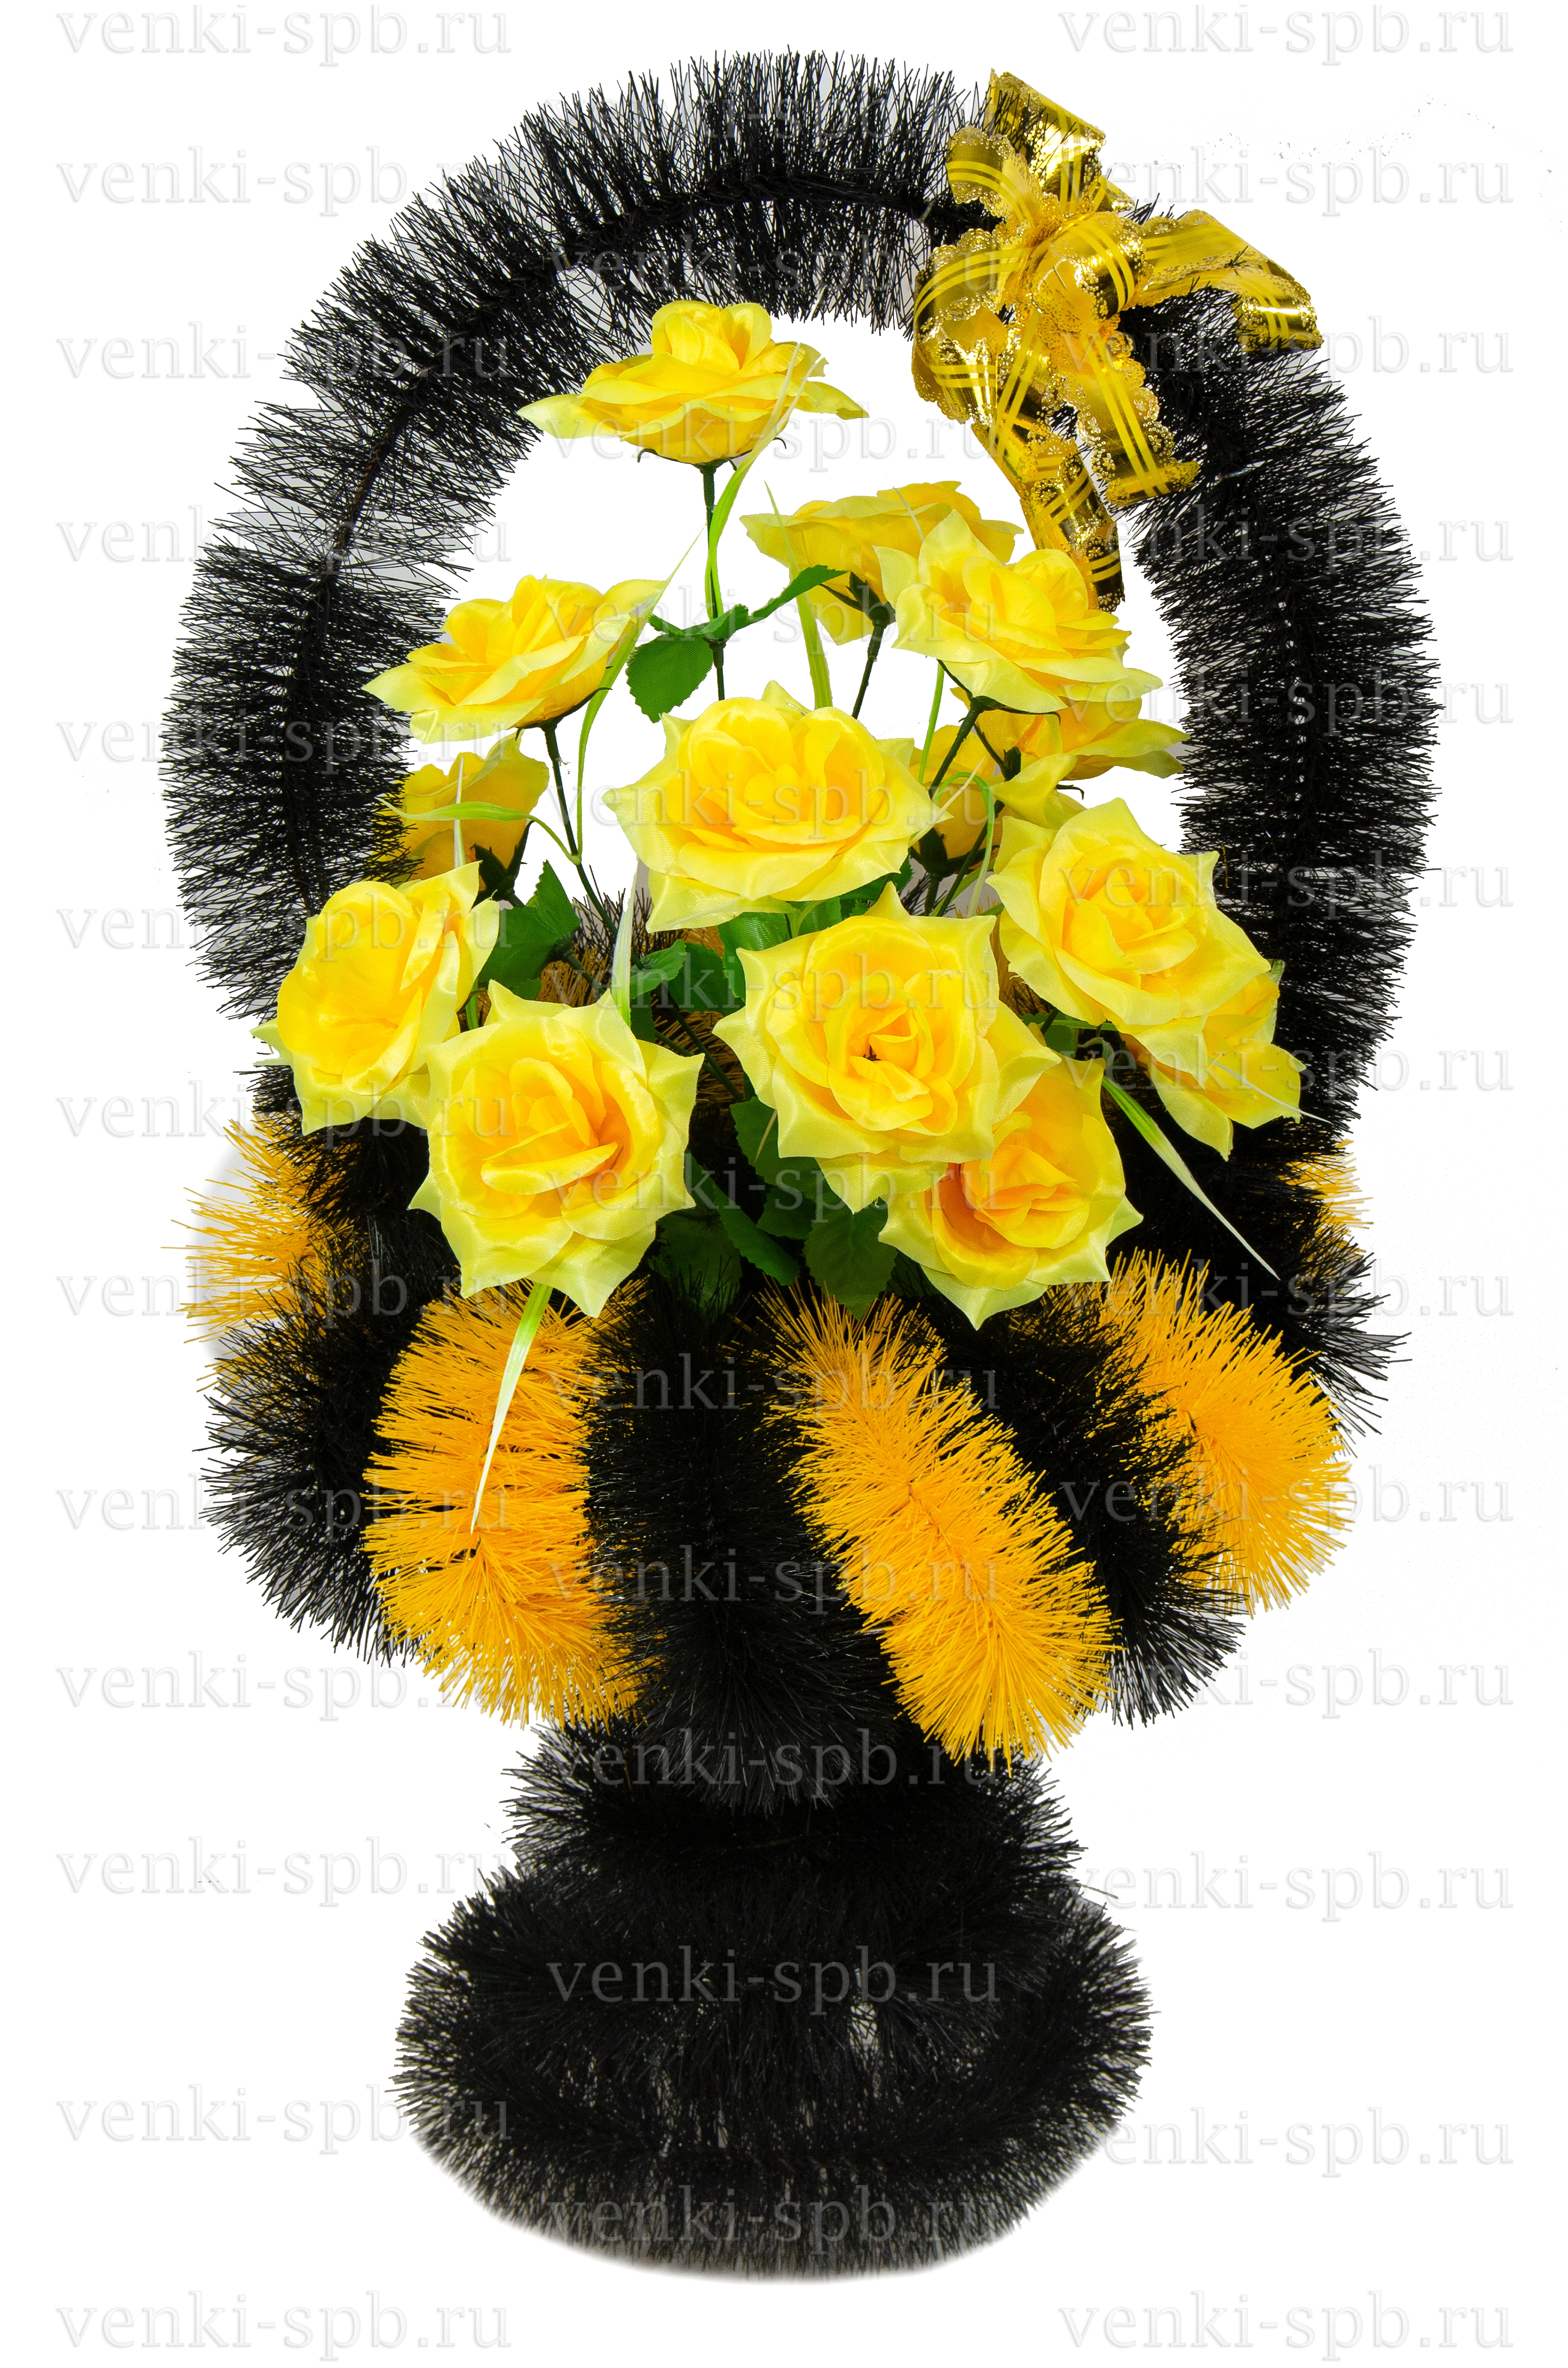 Ваза мини цветная желто-черная - Фото 2 | Компания «Венок»